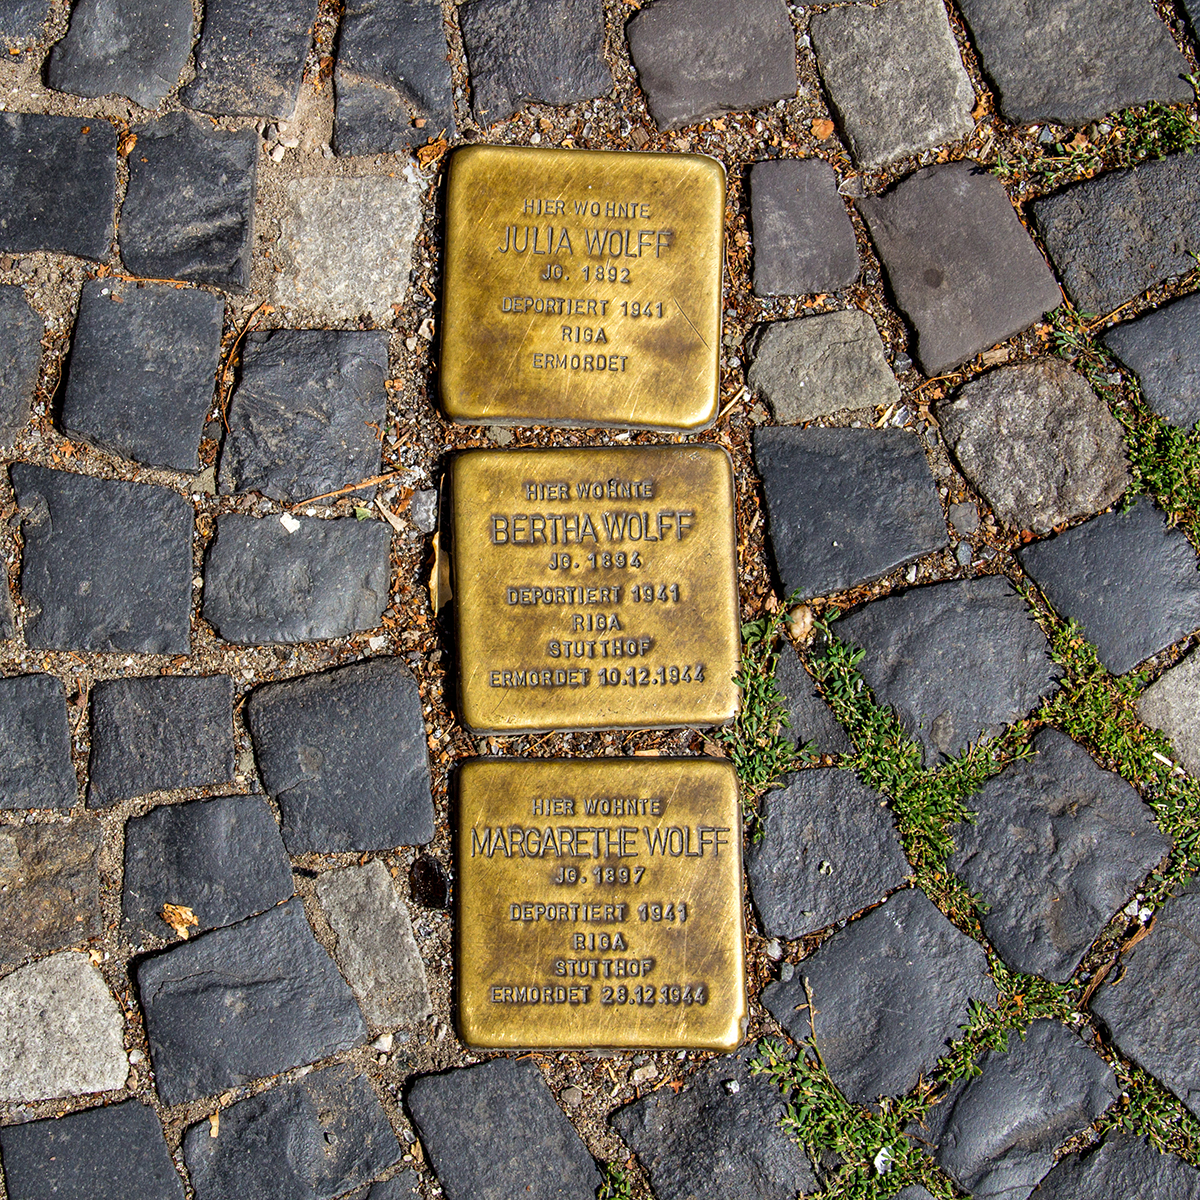 Three small bronze plaques placed into a cobblestone road memorializing Holocaust victims